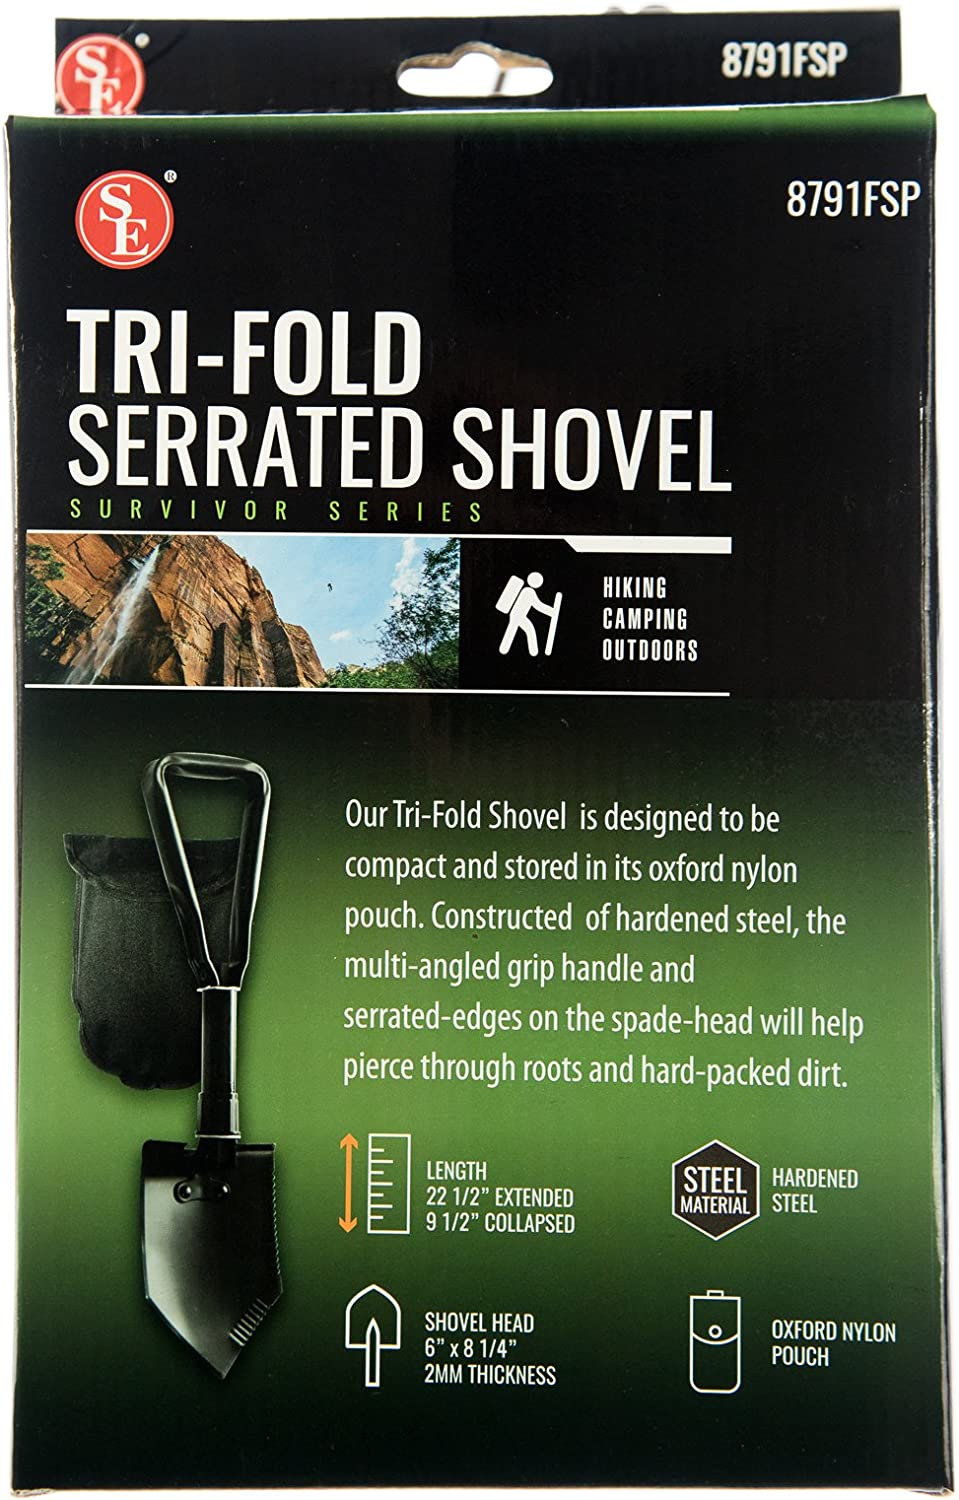 Tri-fold Serrated Shovel - BeReadyFoods.com